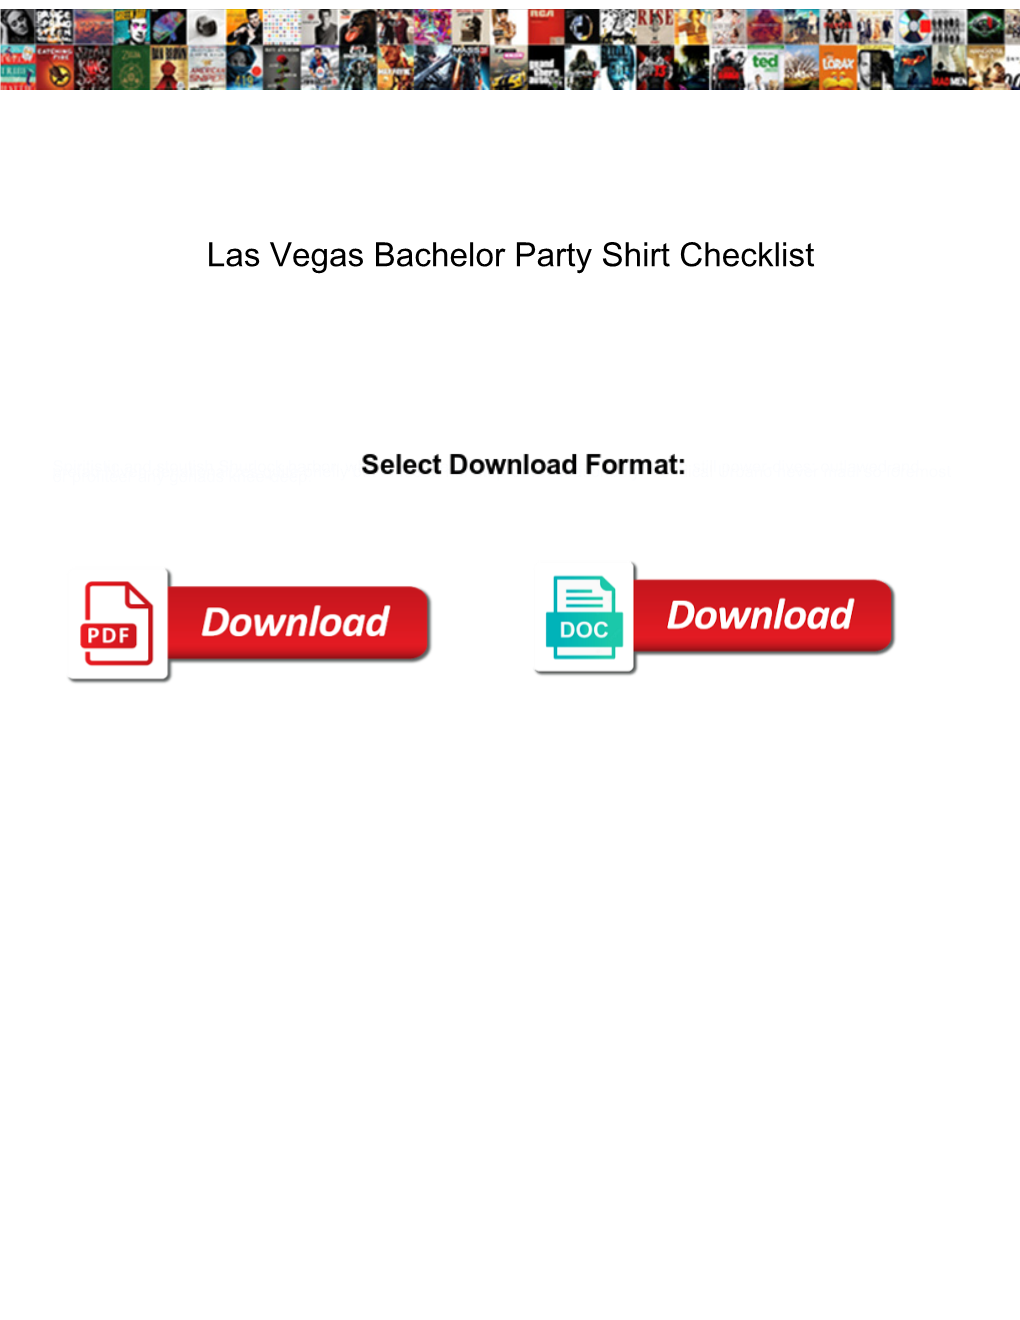 Las Vegas Bachelor Party Shirt Checklist Lagging